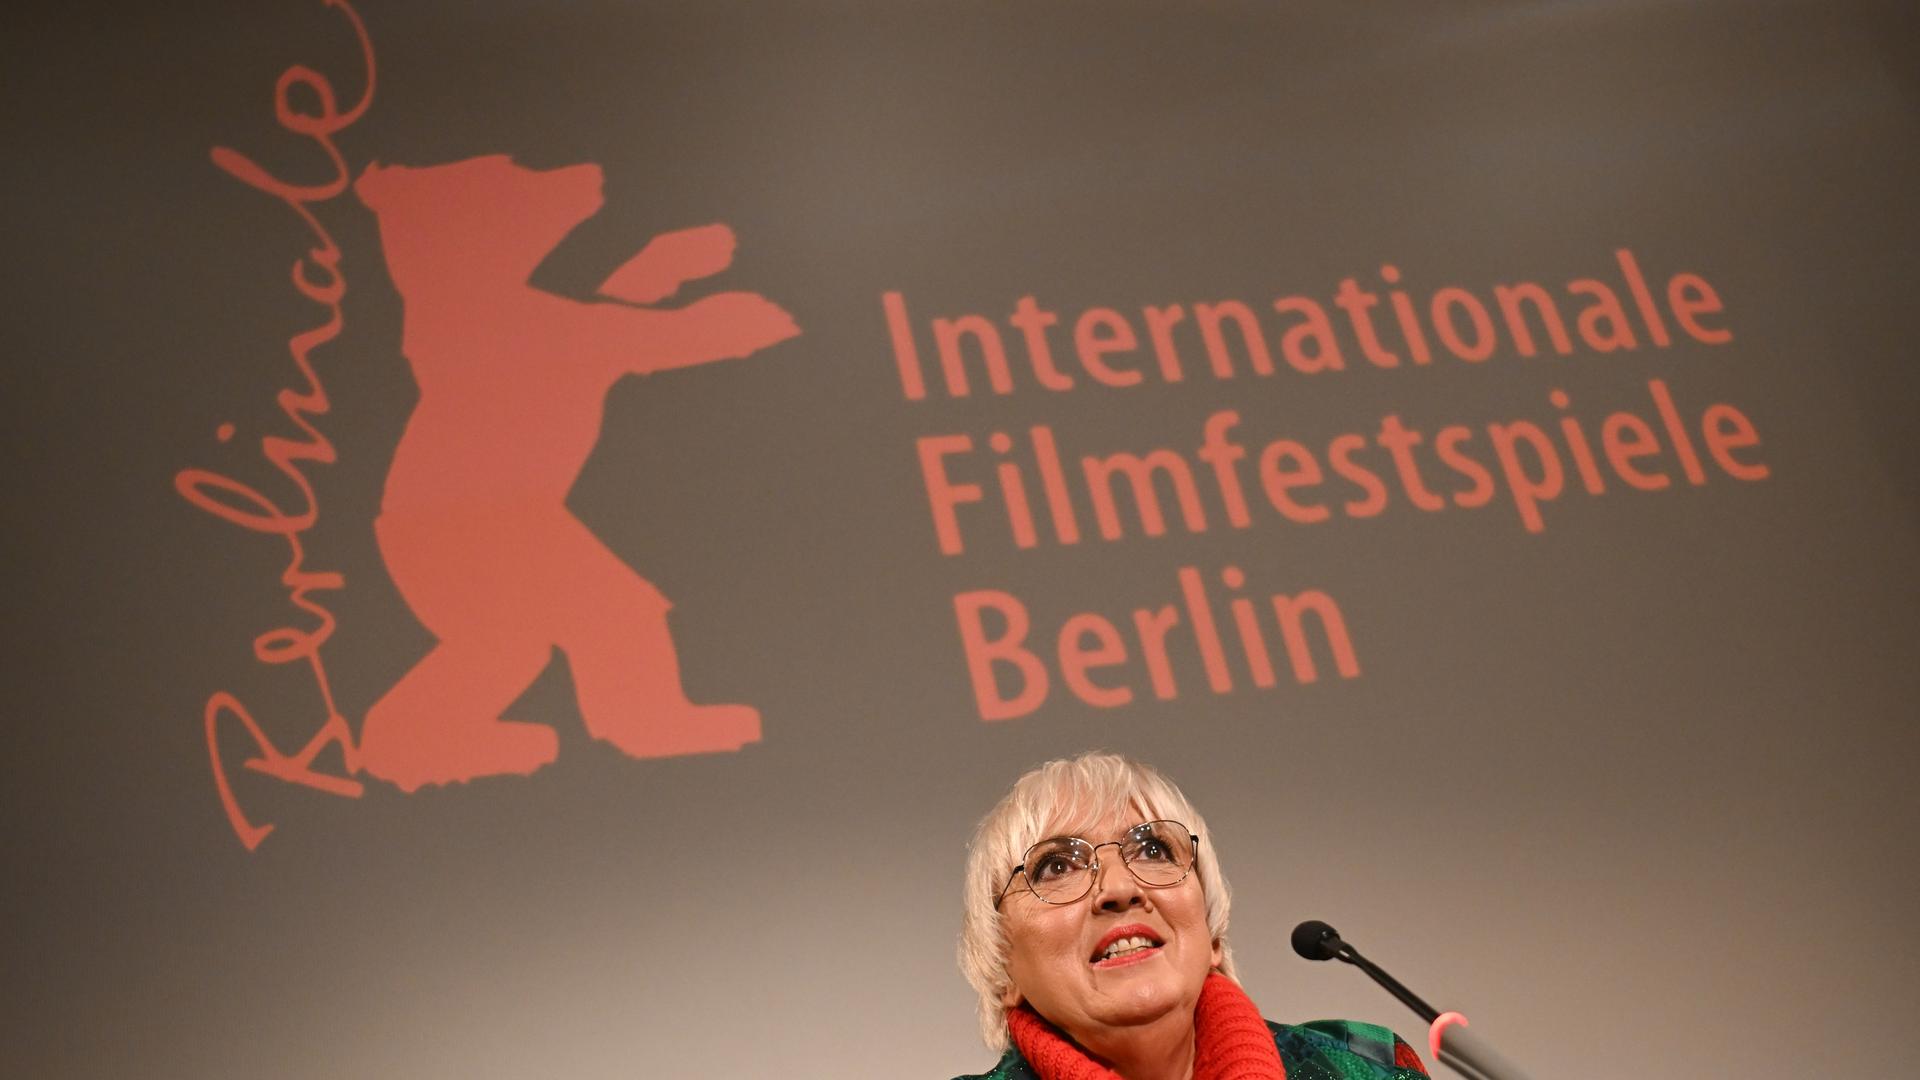 Berlinale-Debatten - Kulturstaatsministerin Roth sieht "ekelhaften offenen Antisemitismus" bei Linksradikalen